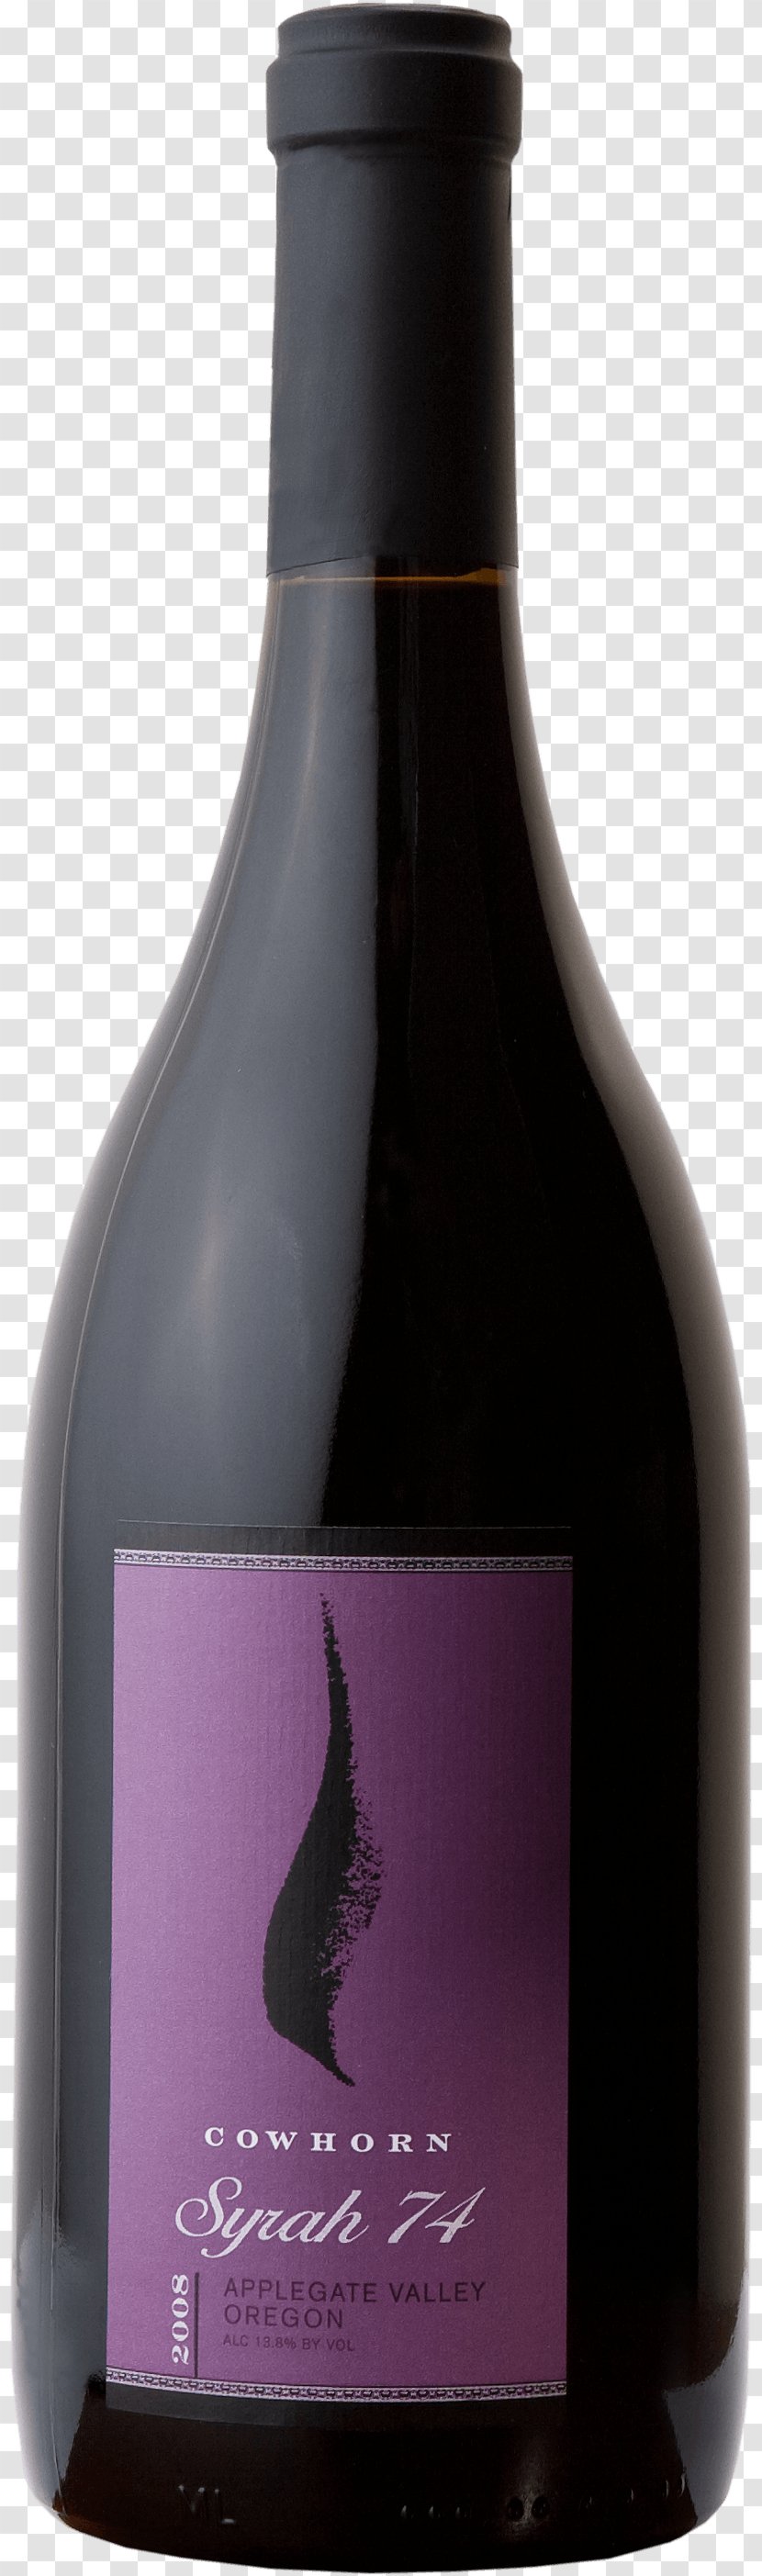 Red Wine Bottle - Image Download Of Transparent PNG